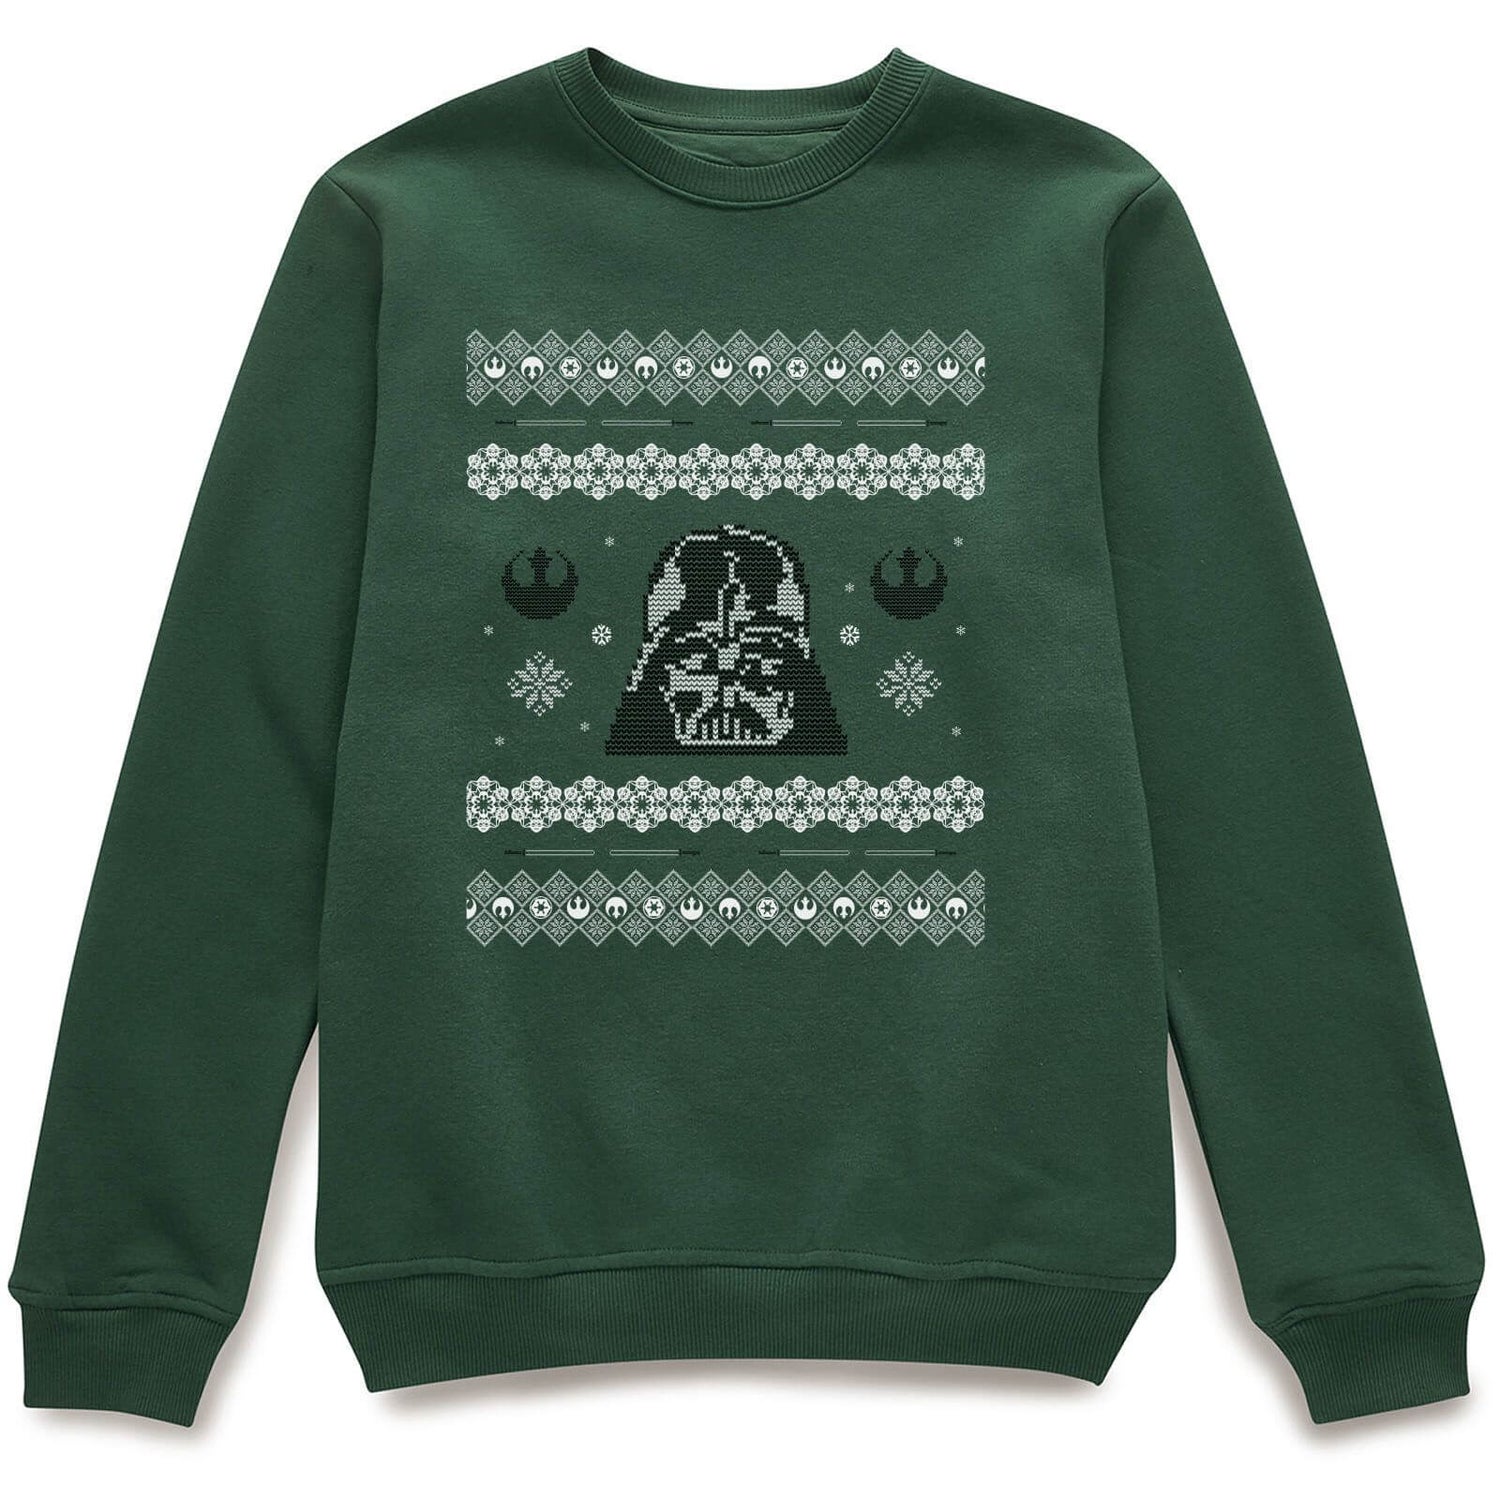 Star Wars Darth Vader Kersttrui - Donkergroen